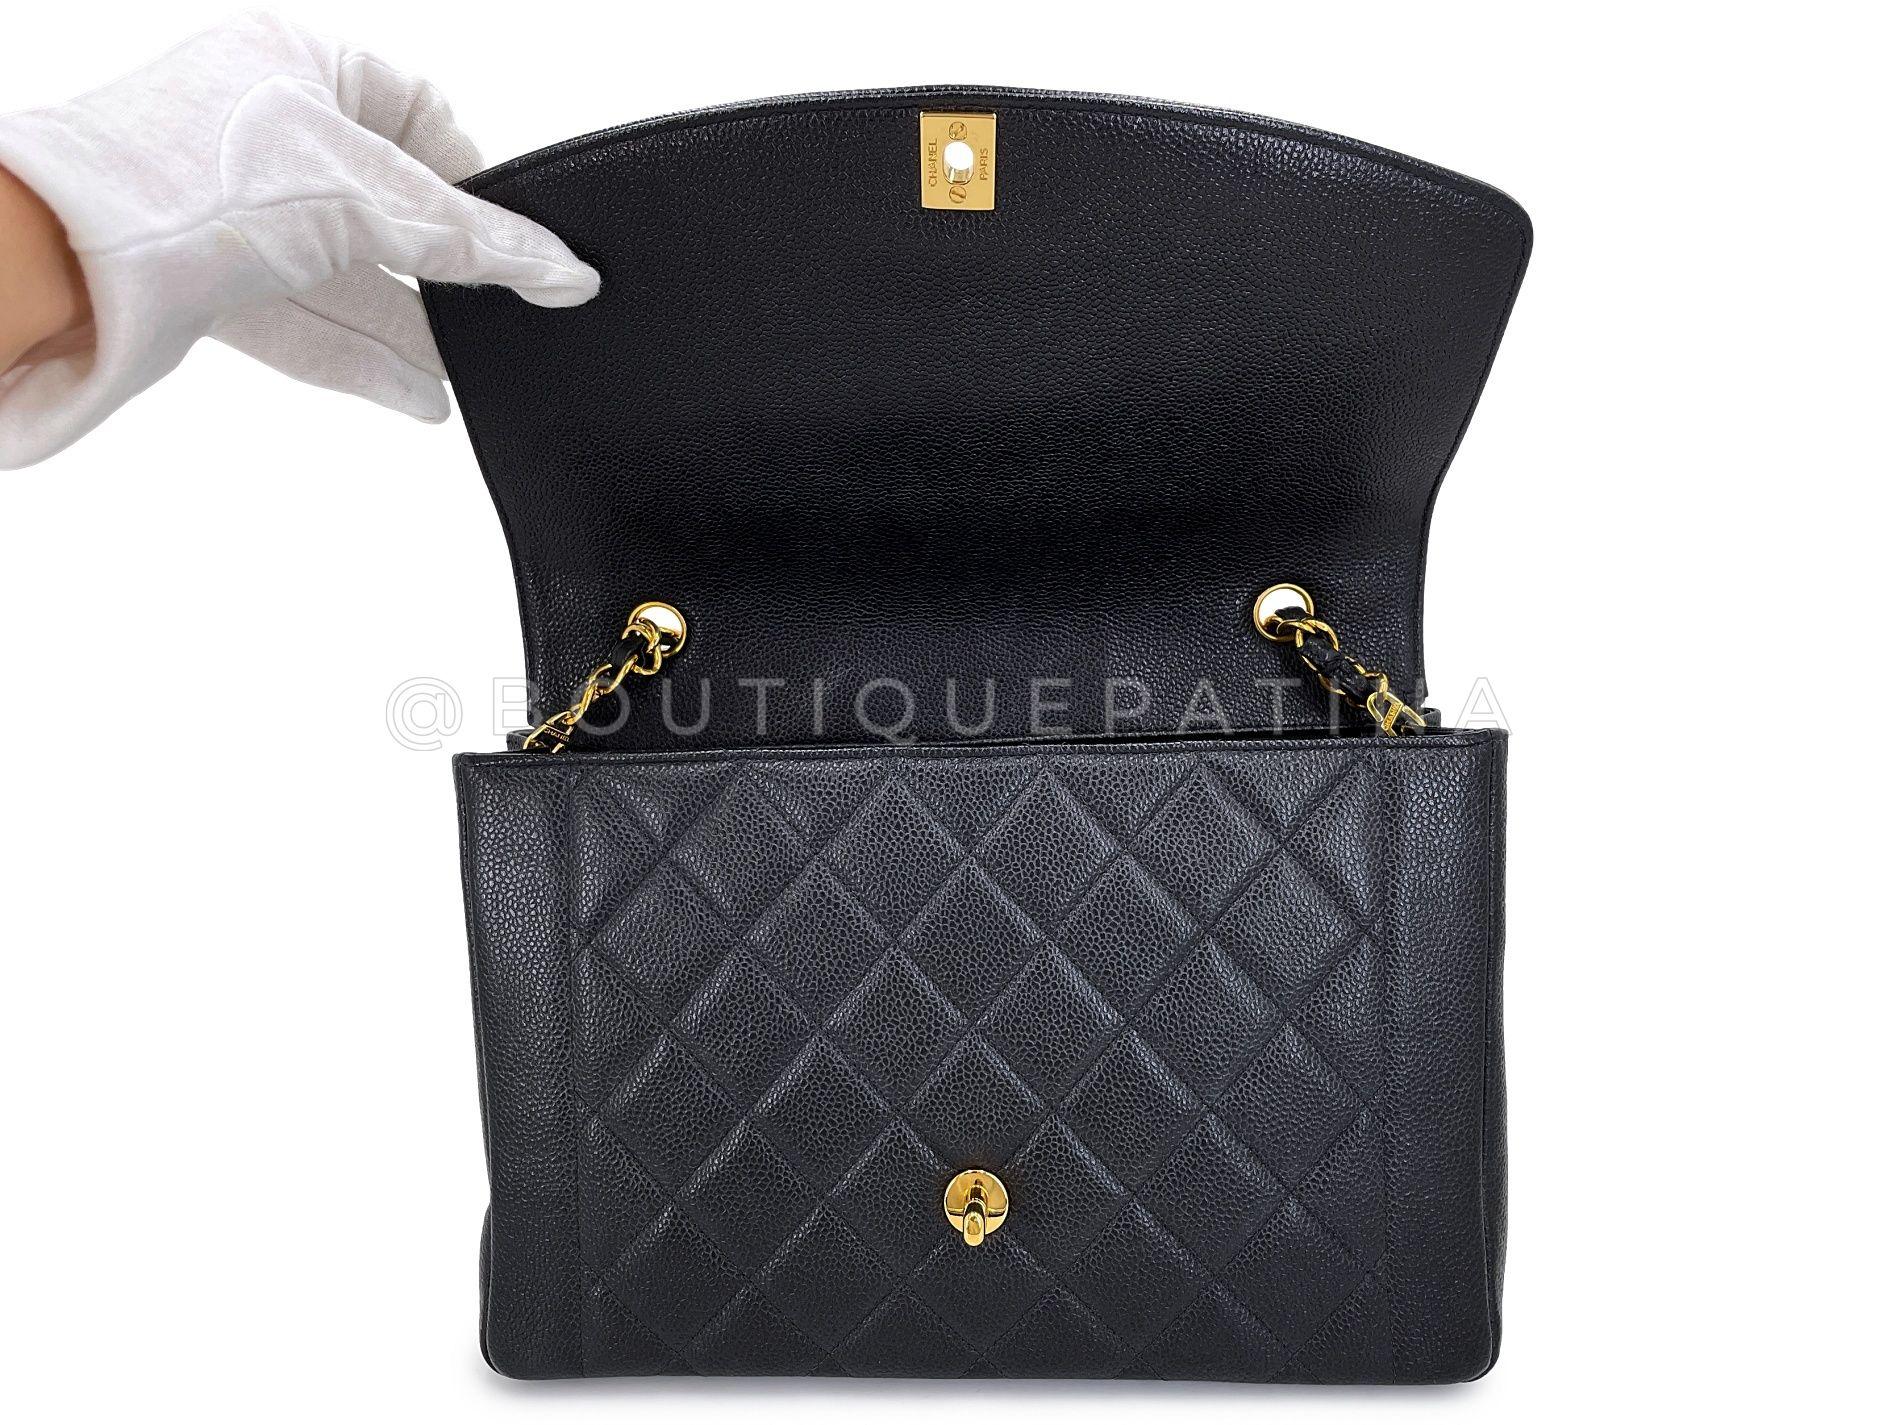 Rare Chanel 1997 Vintage Large Jumbo Black Caviar Diana Flap Bag 24k GHW 68110 For Sale 5